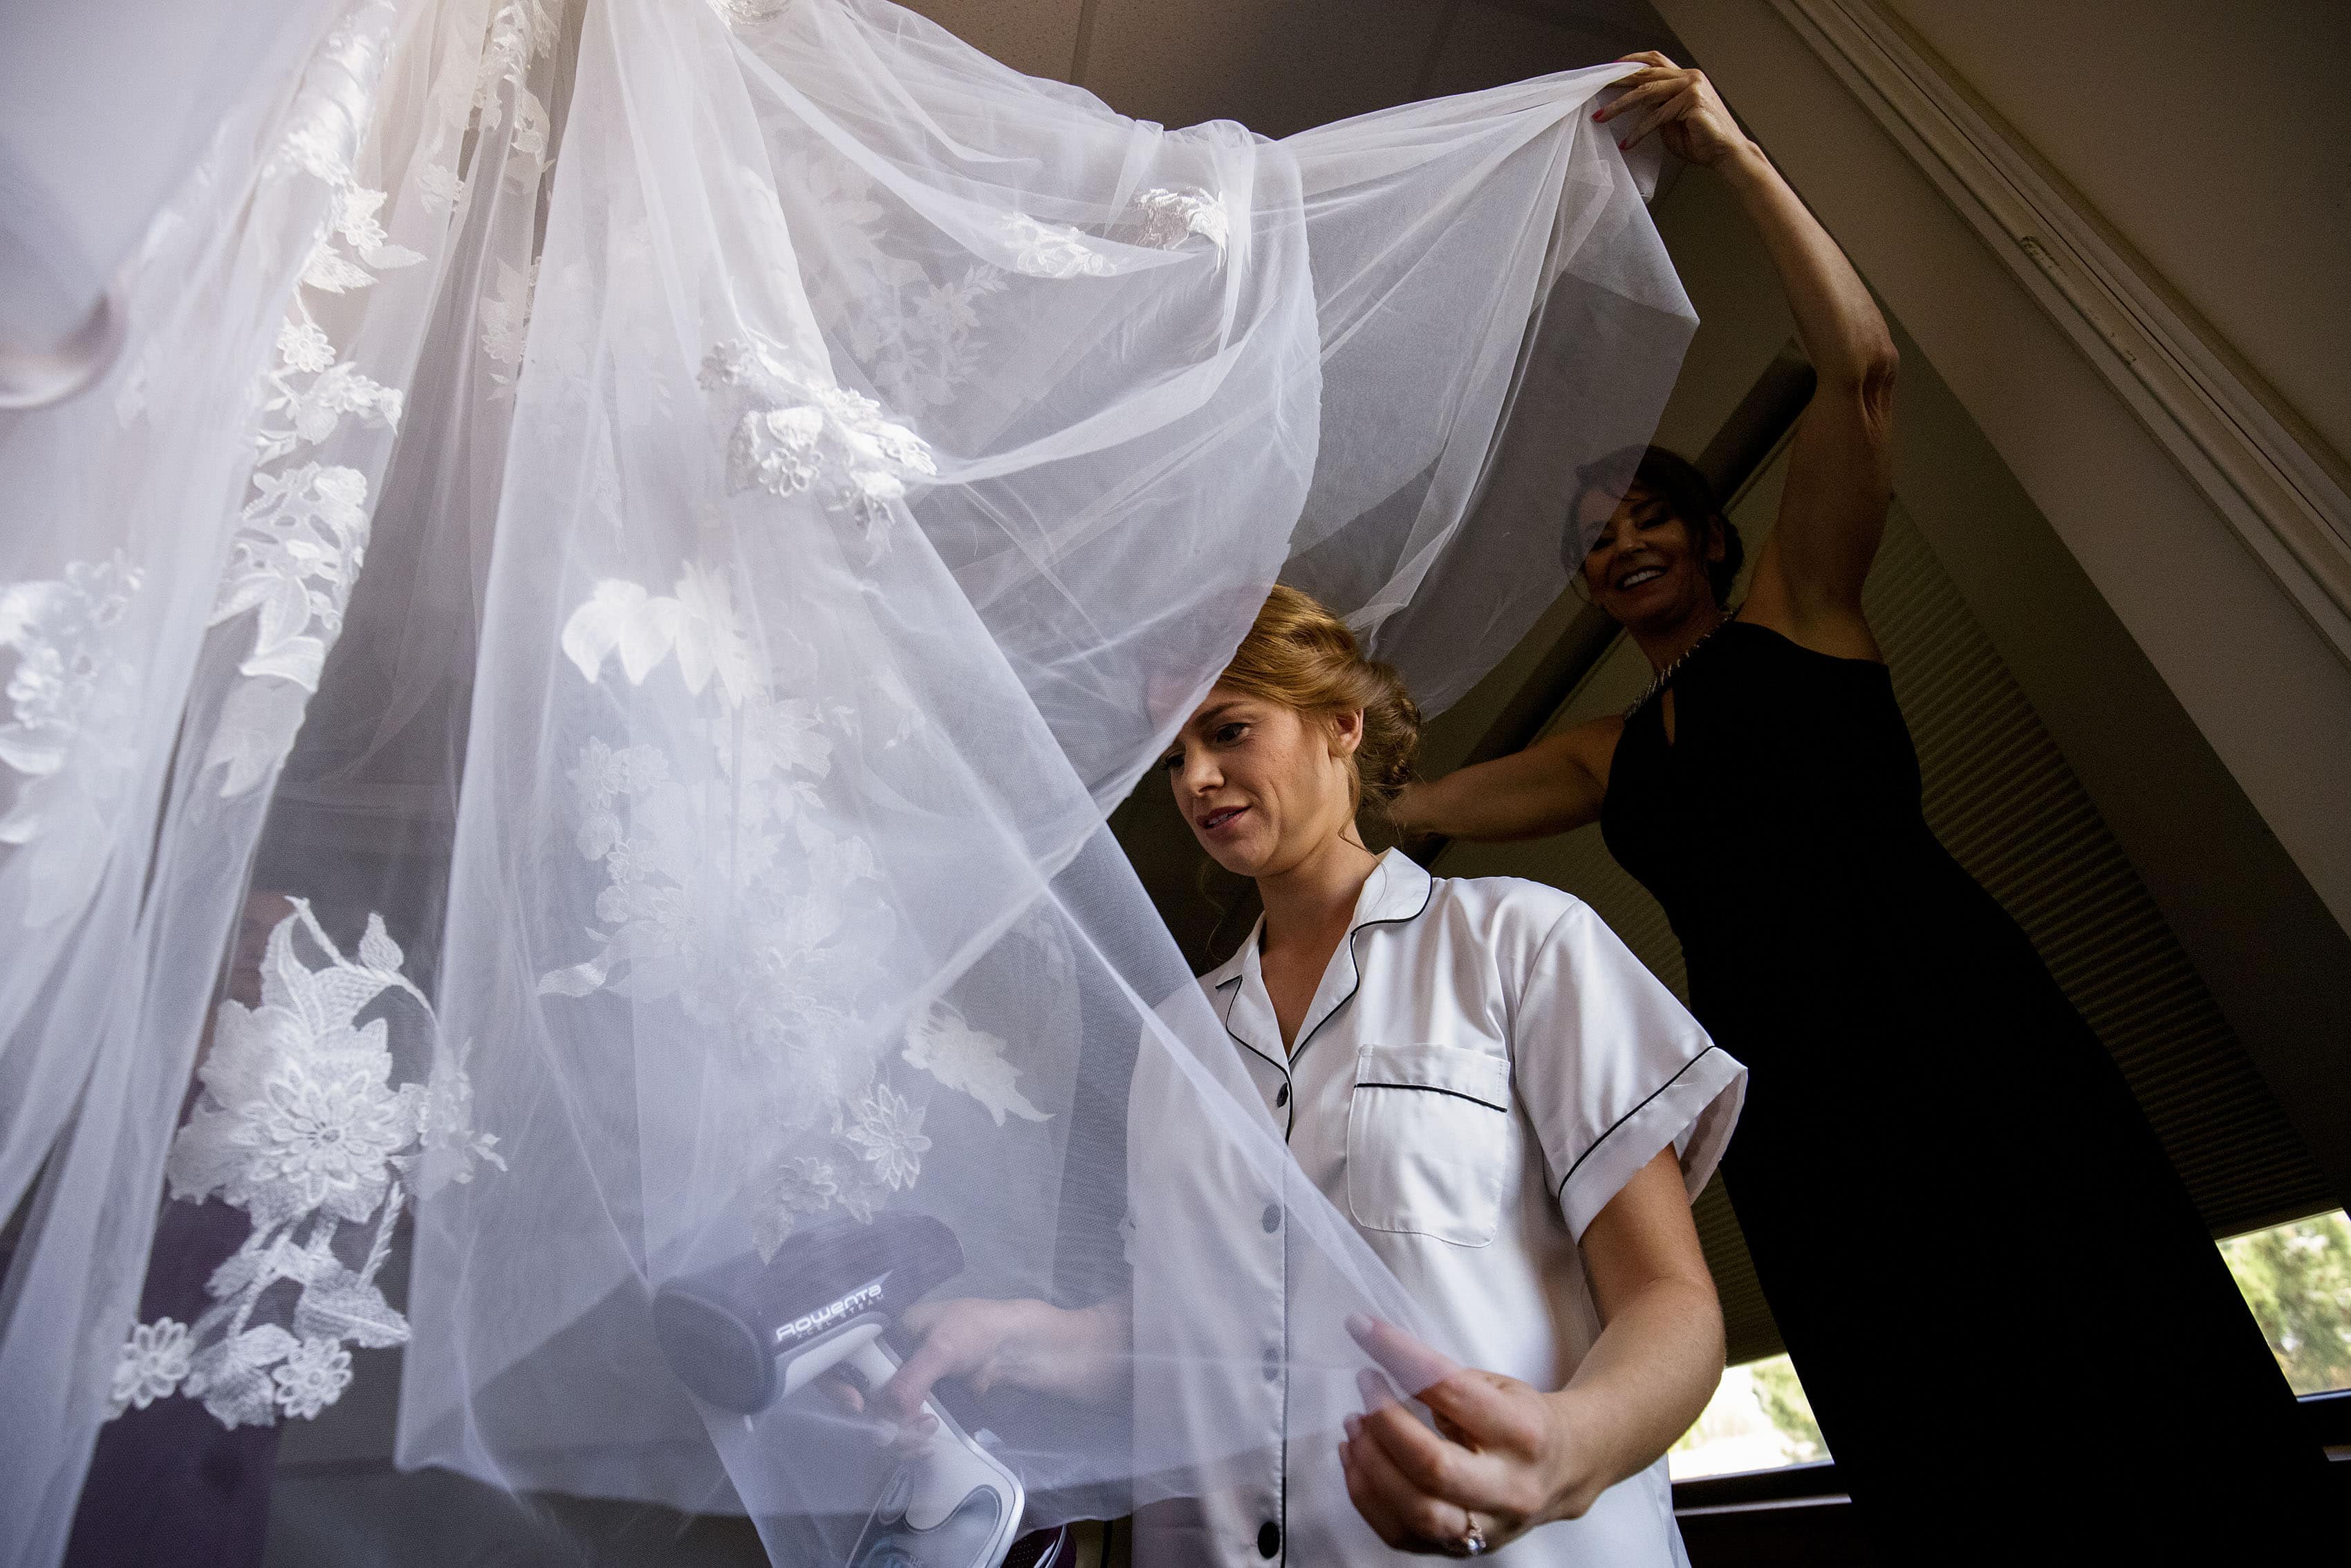 Makena steams her wedding dress